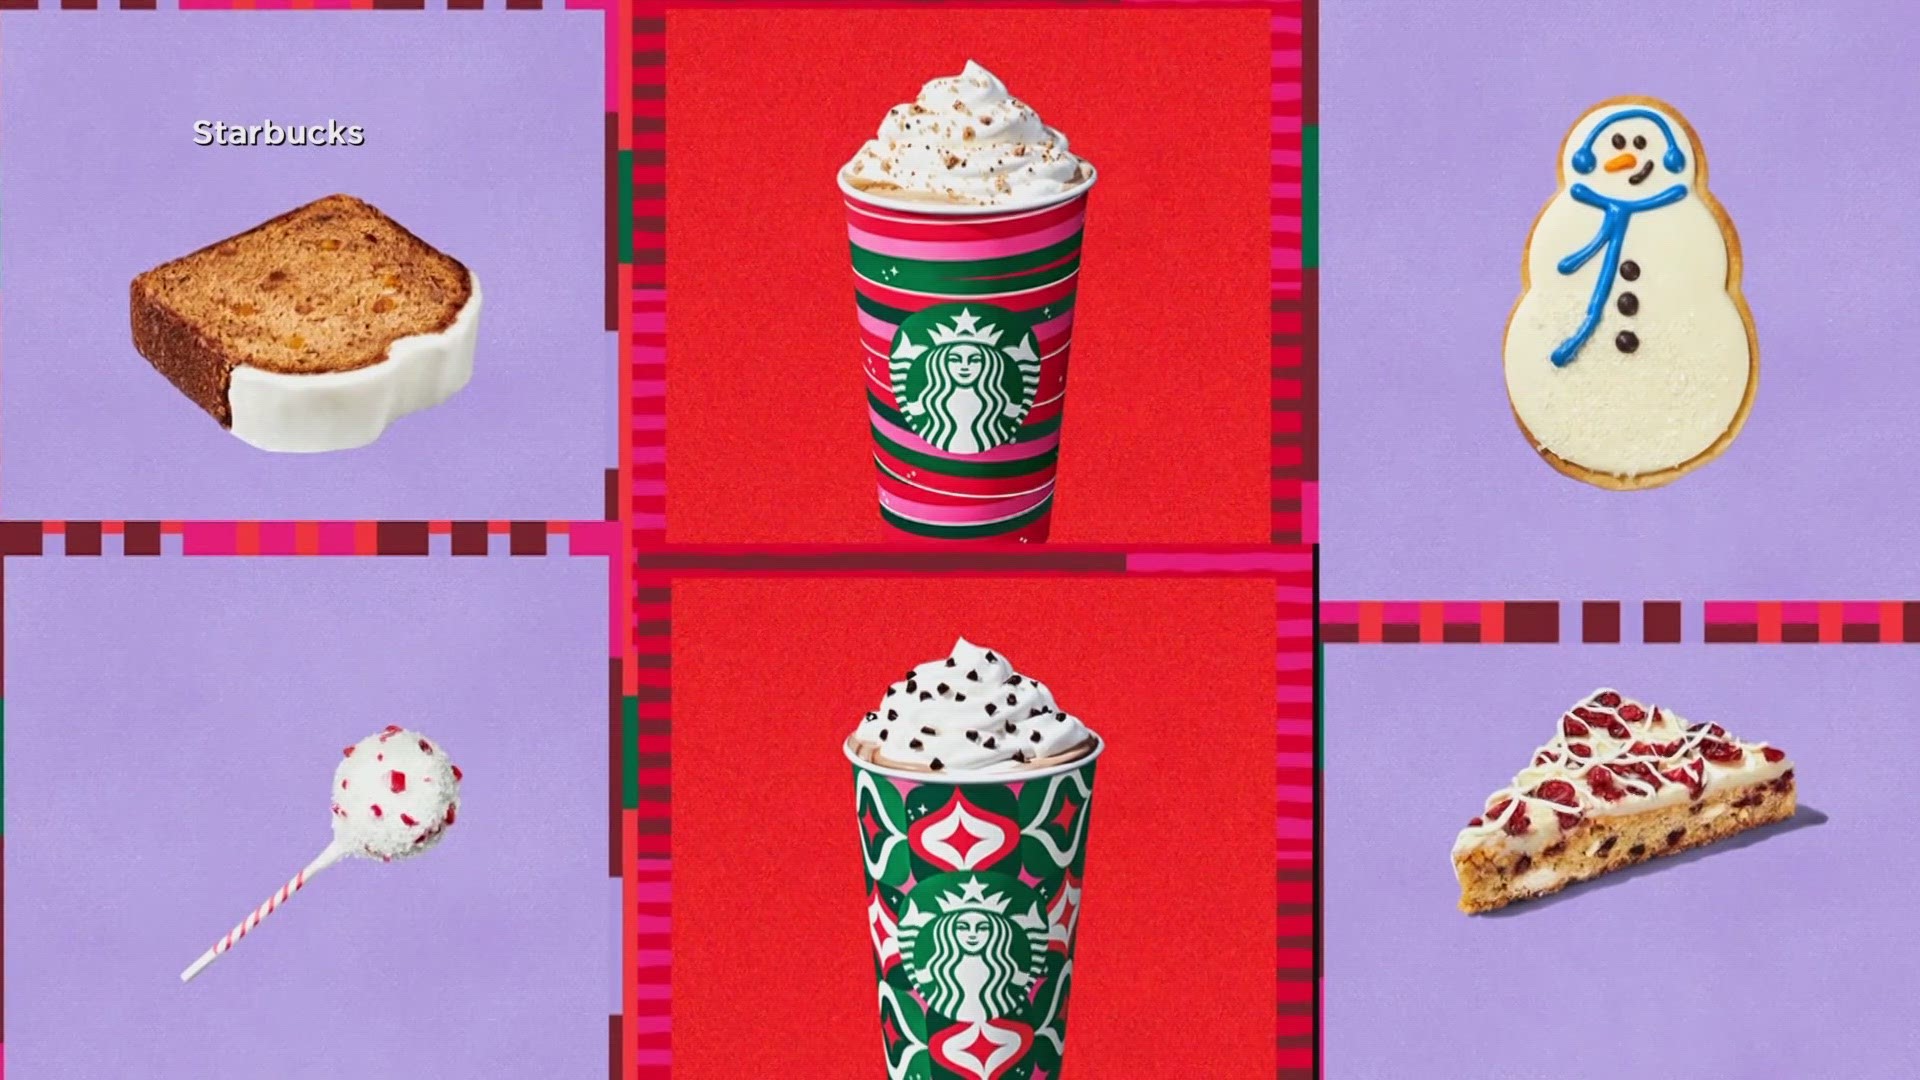 Starbucks unveils seasonal gifts and reusable cup sets - Starbucks